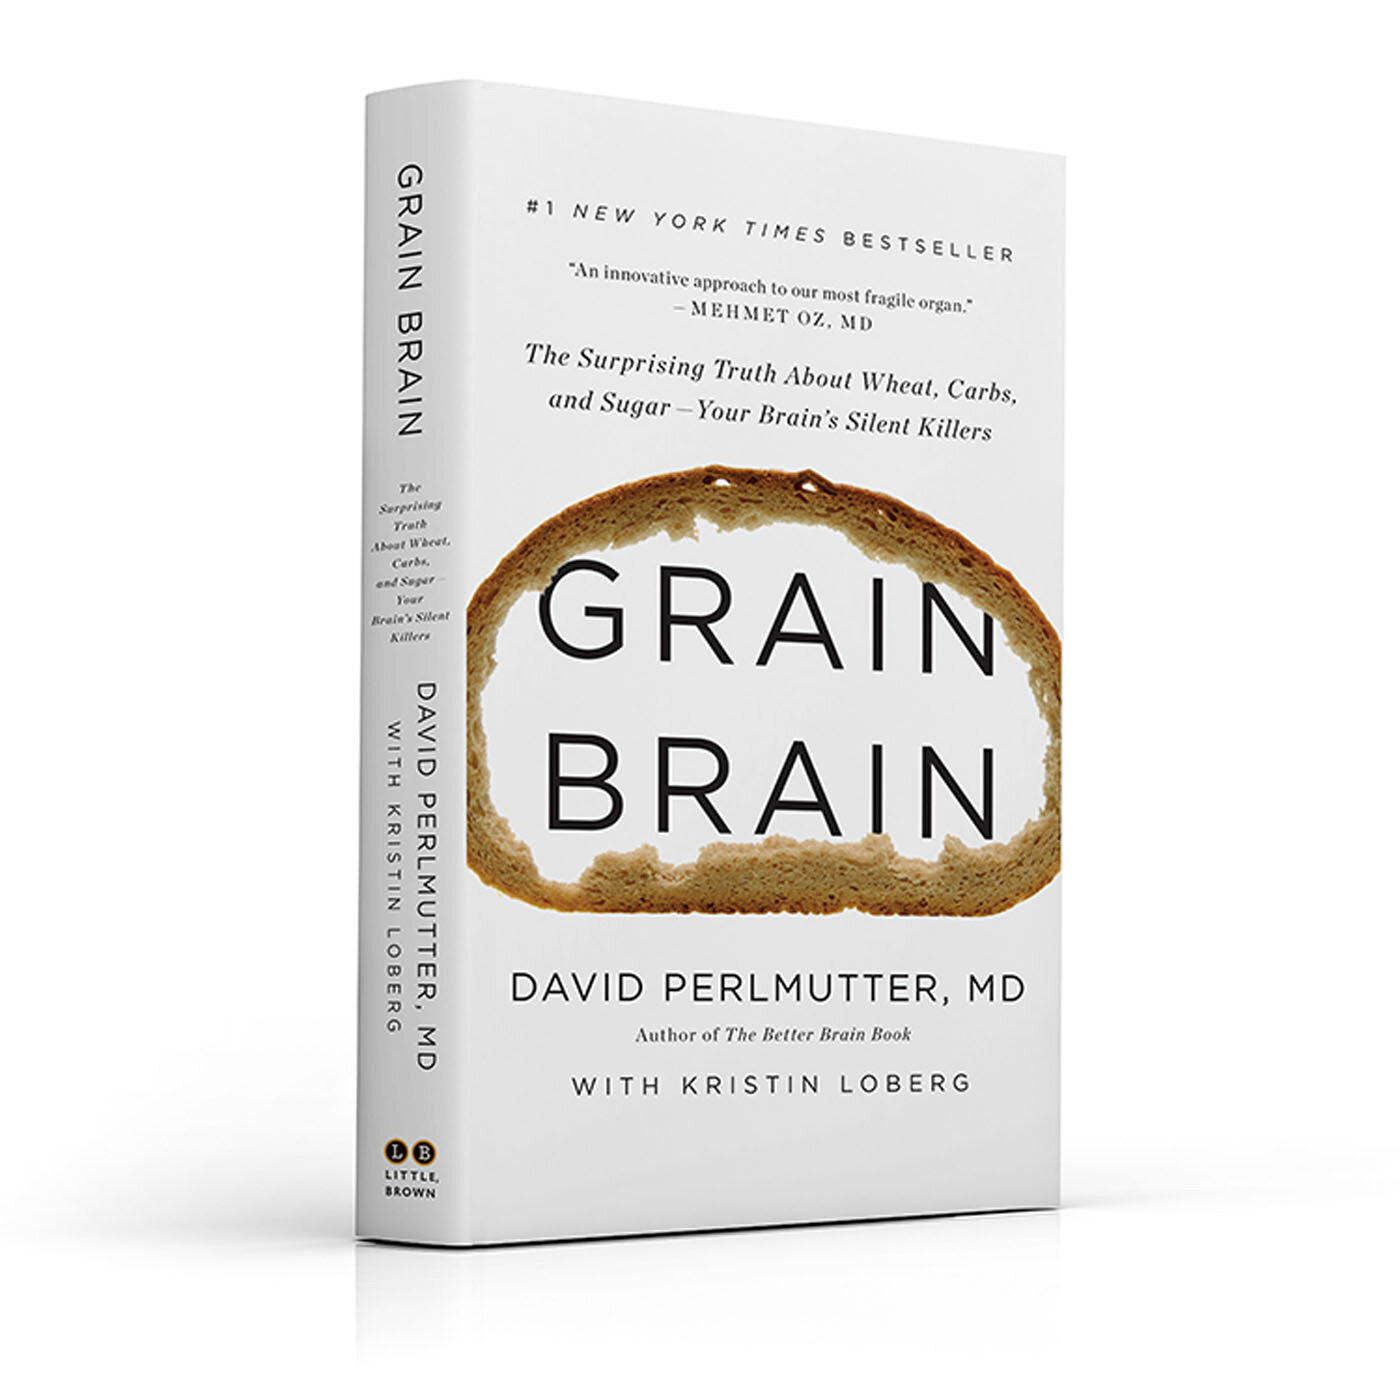 Grain-Brain-Image.jpg